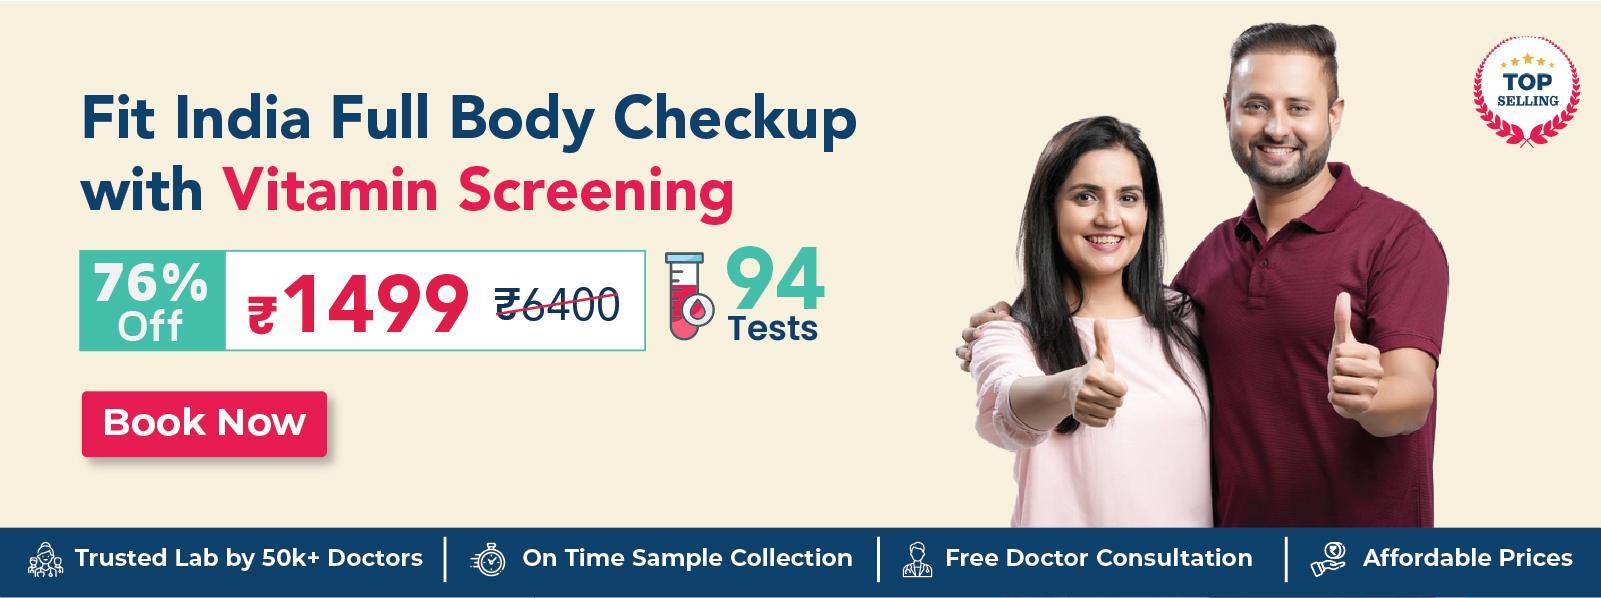 Fit India Full Body checkup with Vitamin Screening in Aligarh